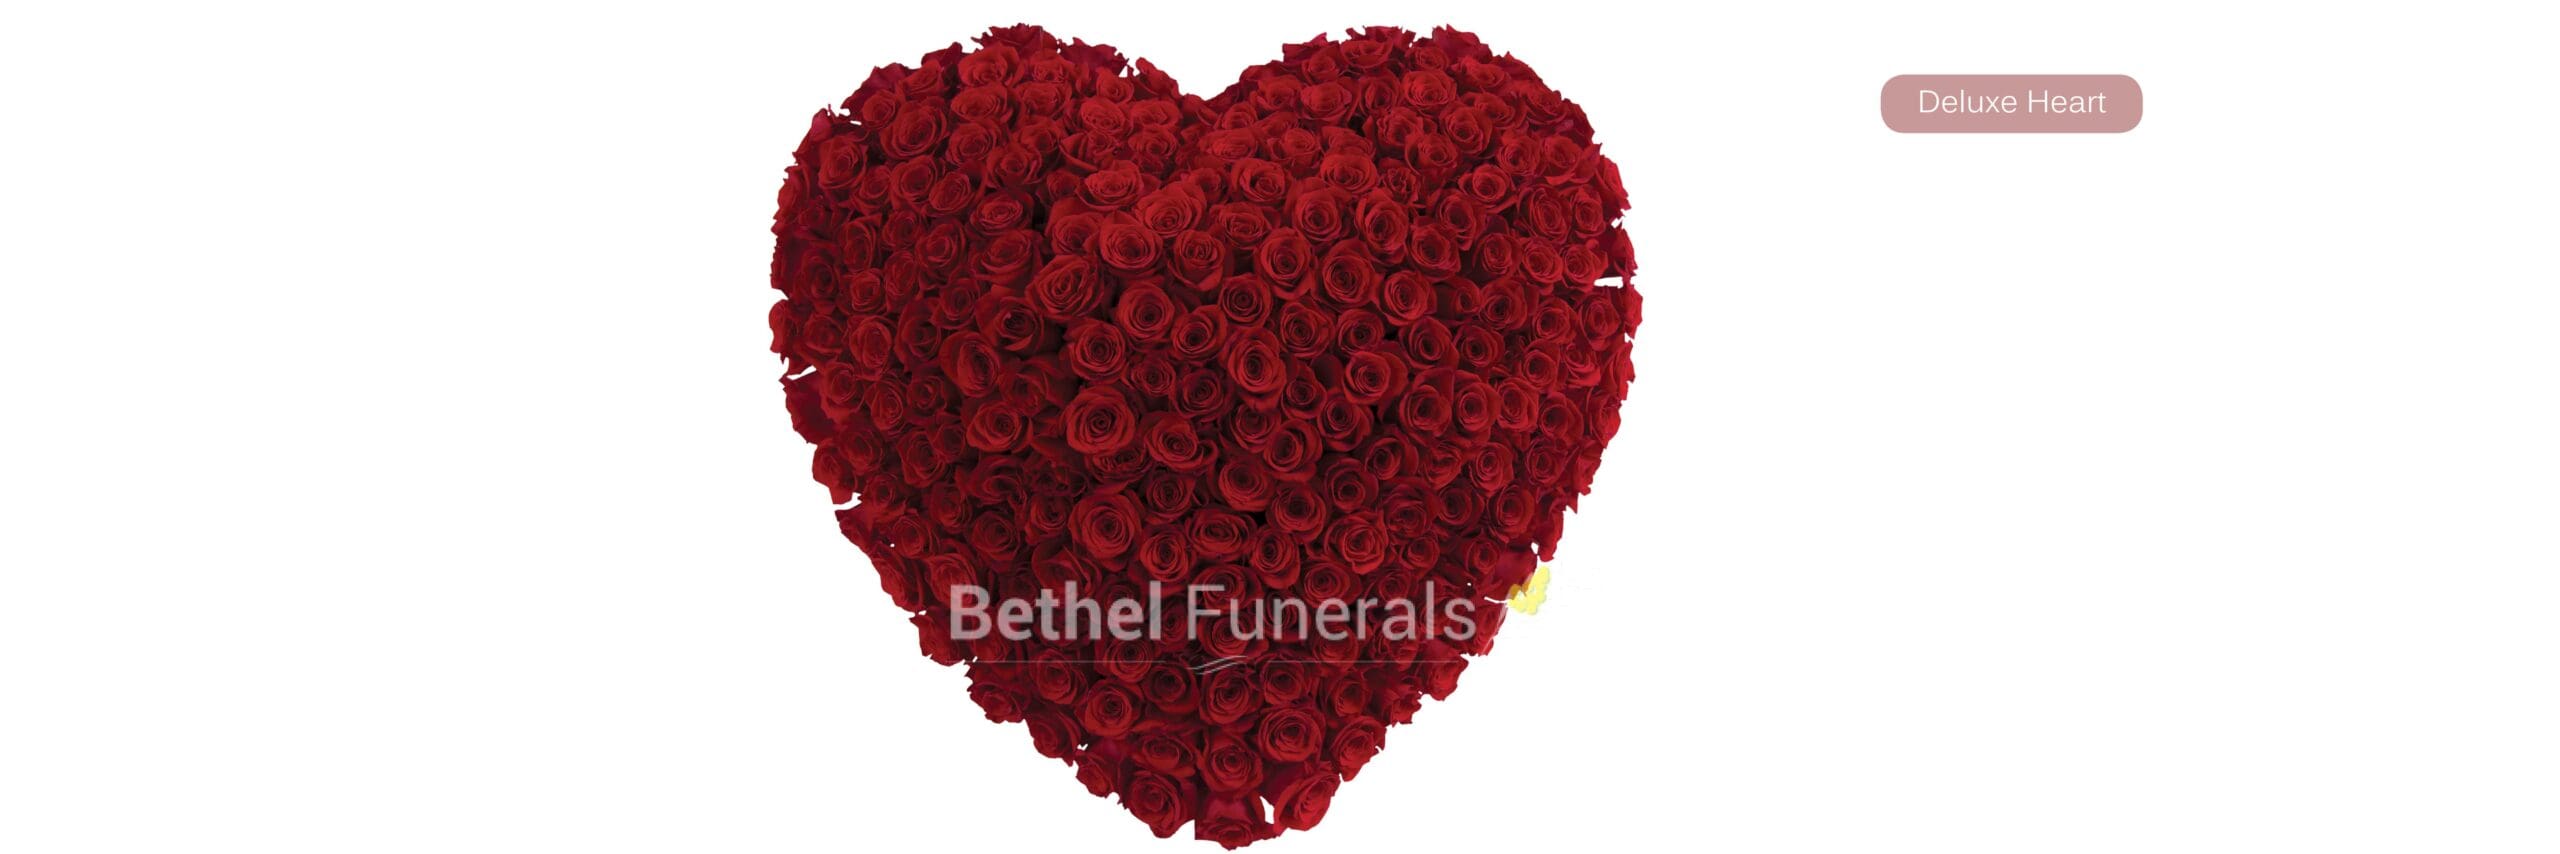 Deluxe heart funeral flowers